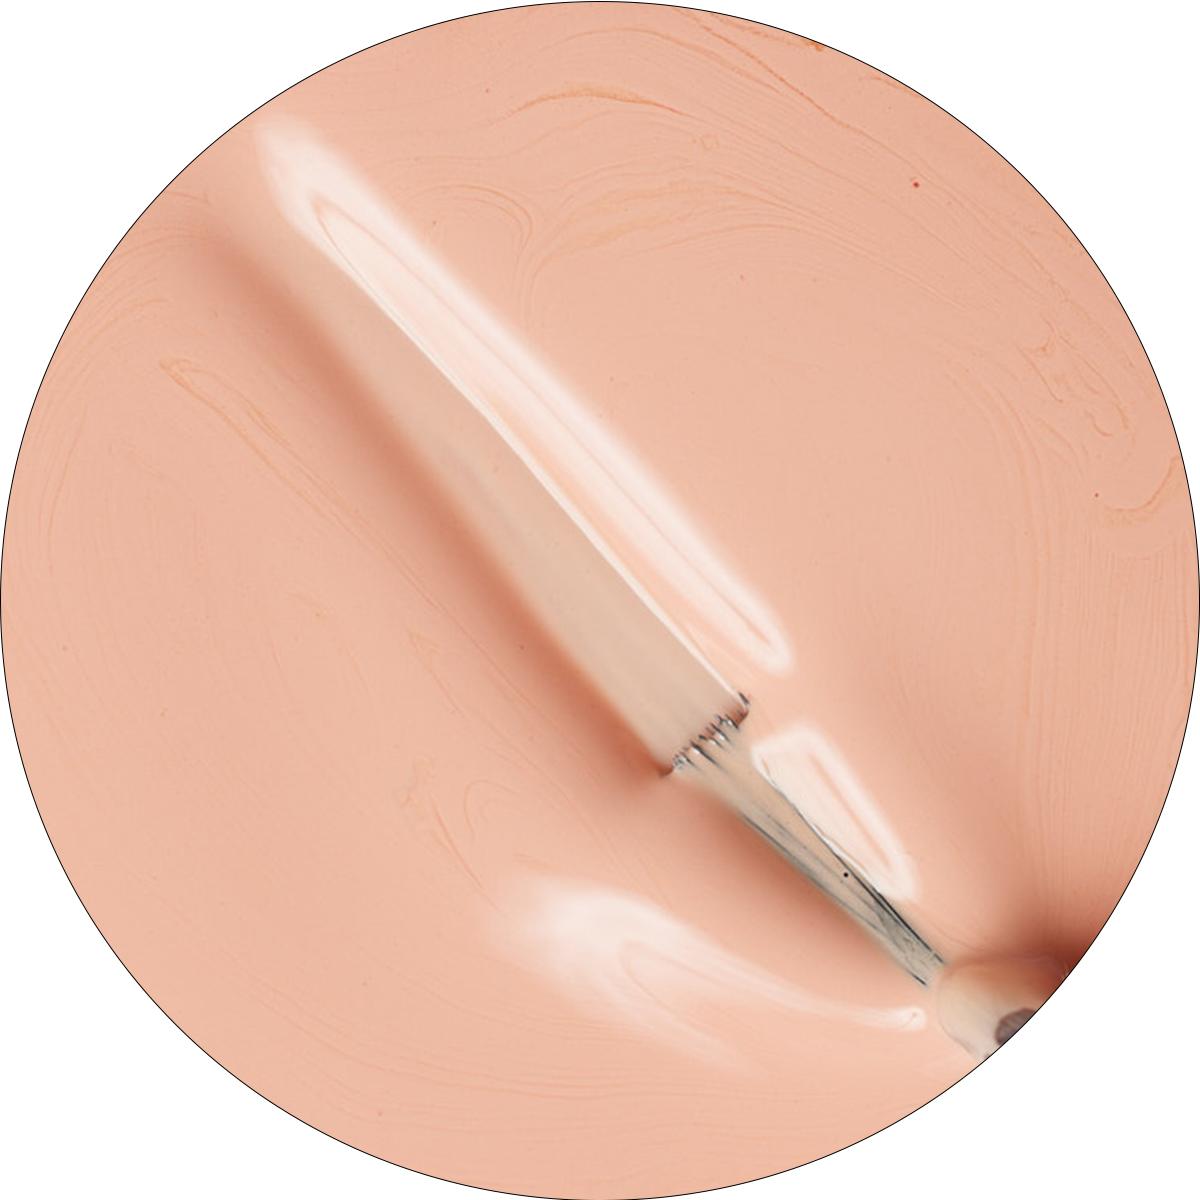 closeup paint swatch of pink nude nail polish